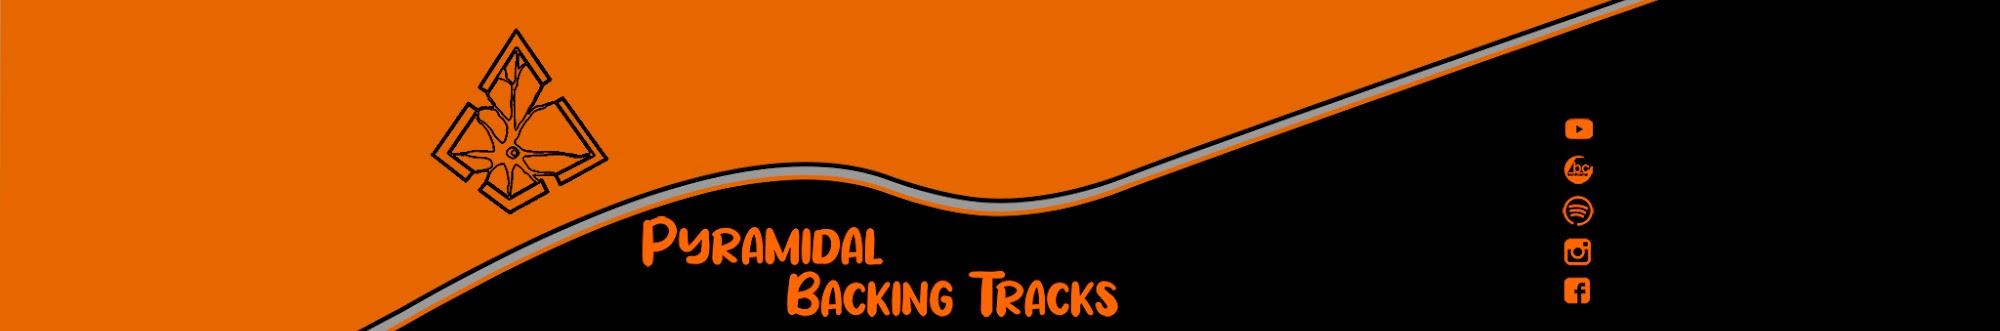 Pyramidal Backing Tracks